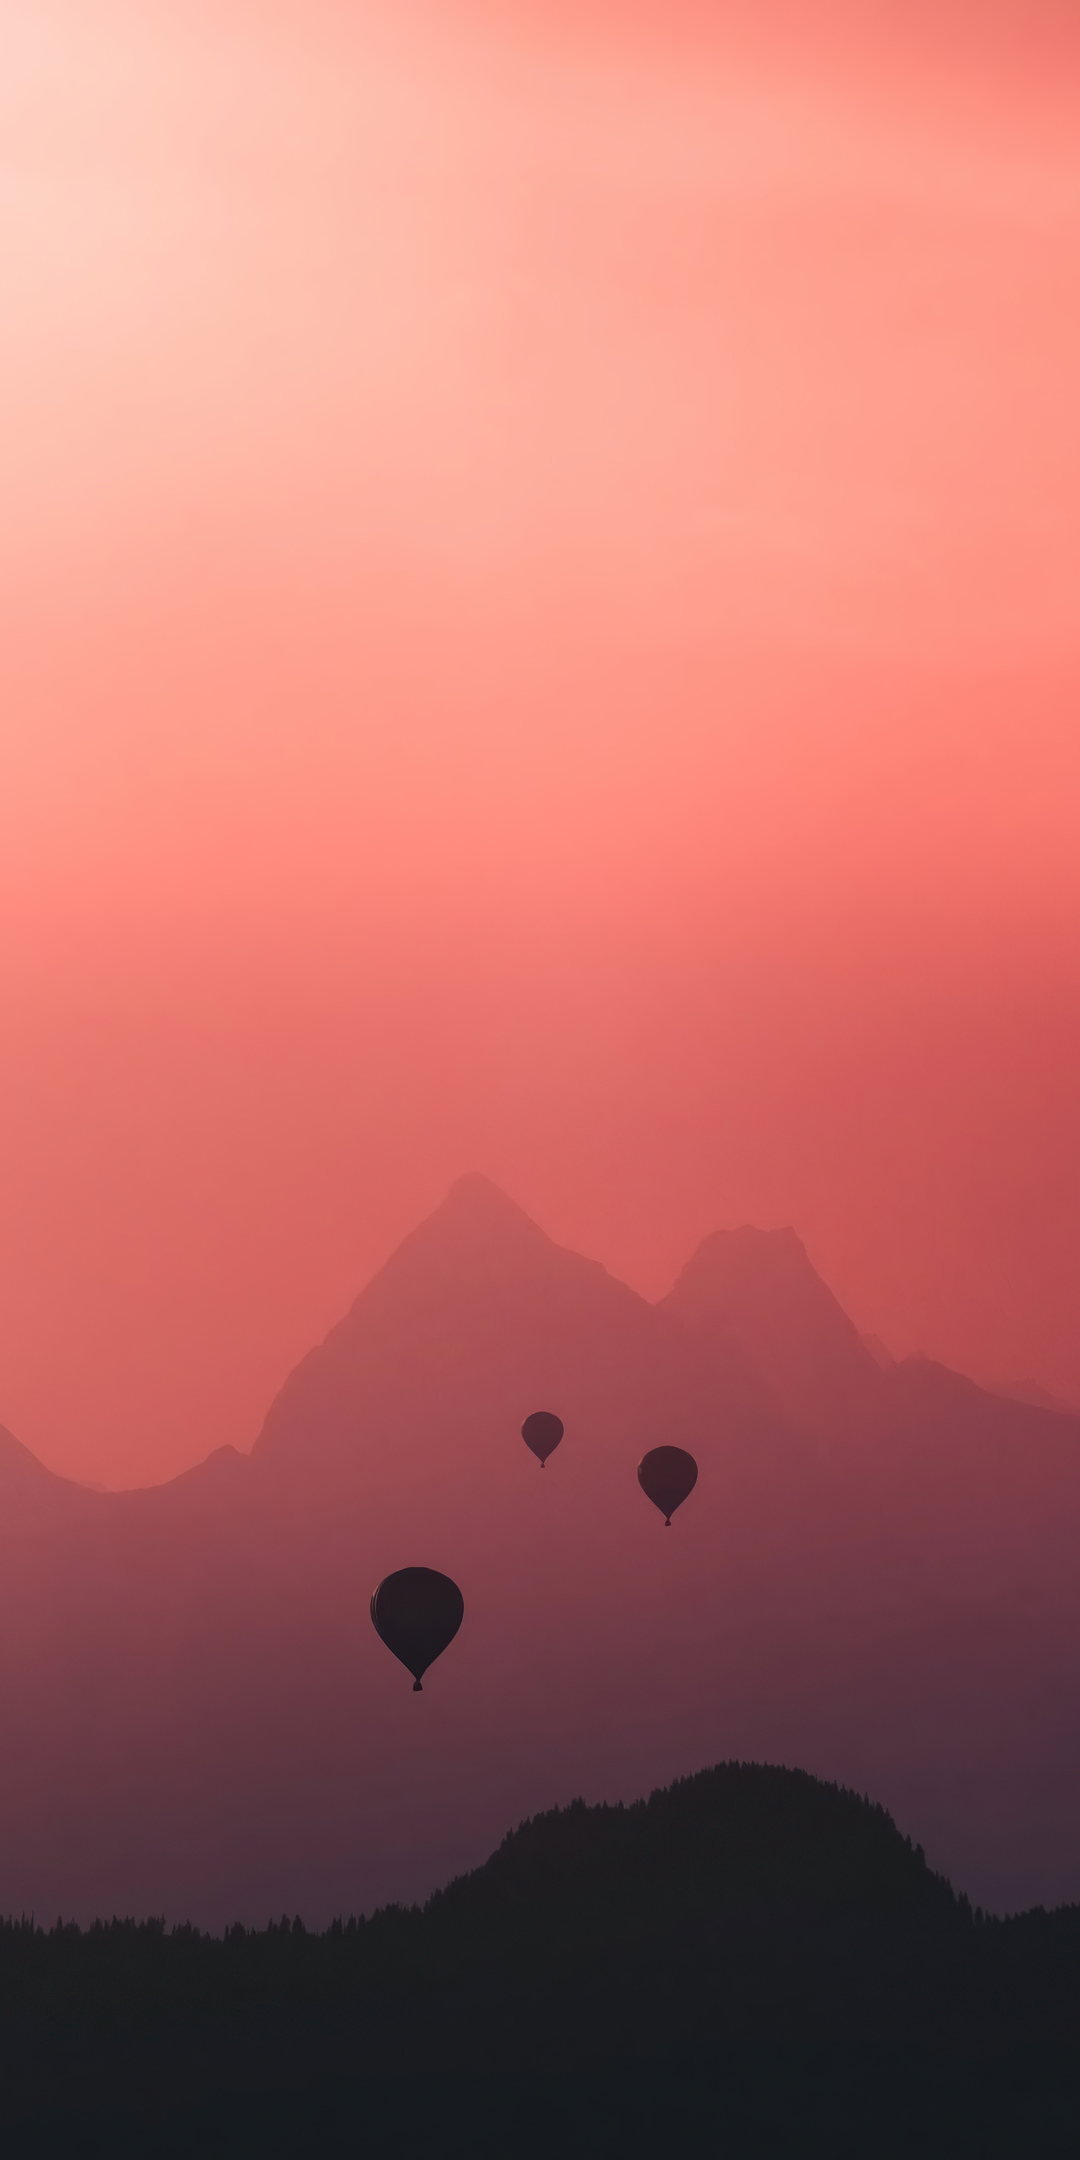 air-ballon-evening-m0.jpg